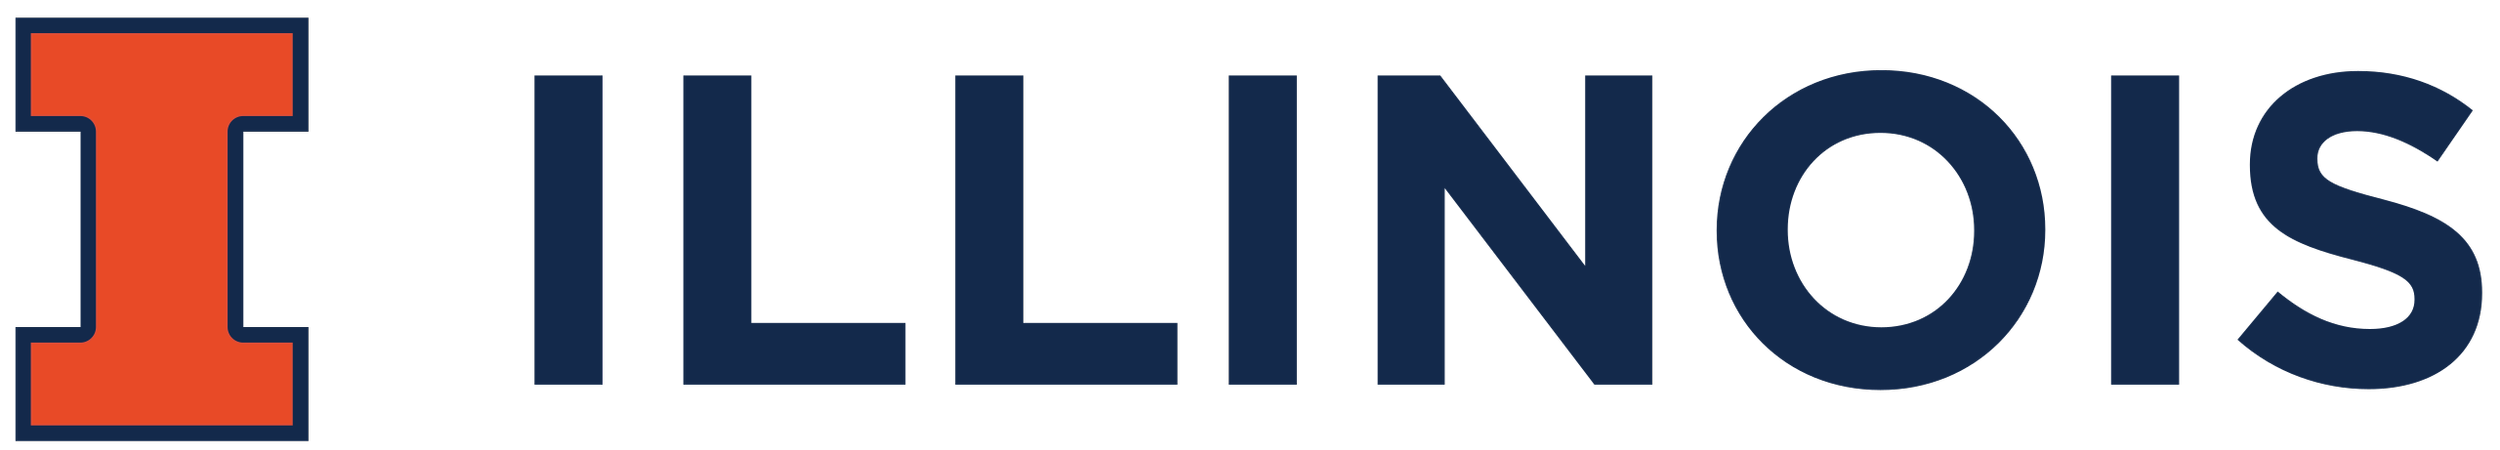 University_of_Illinois_at_Urbana–Champaign_logo.svg.png